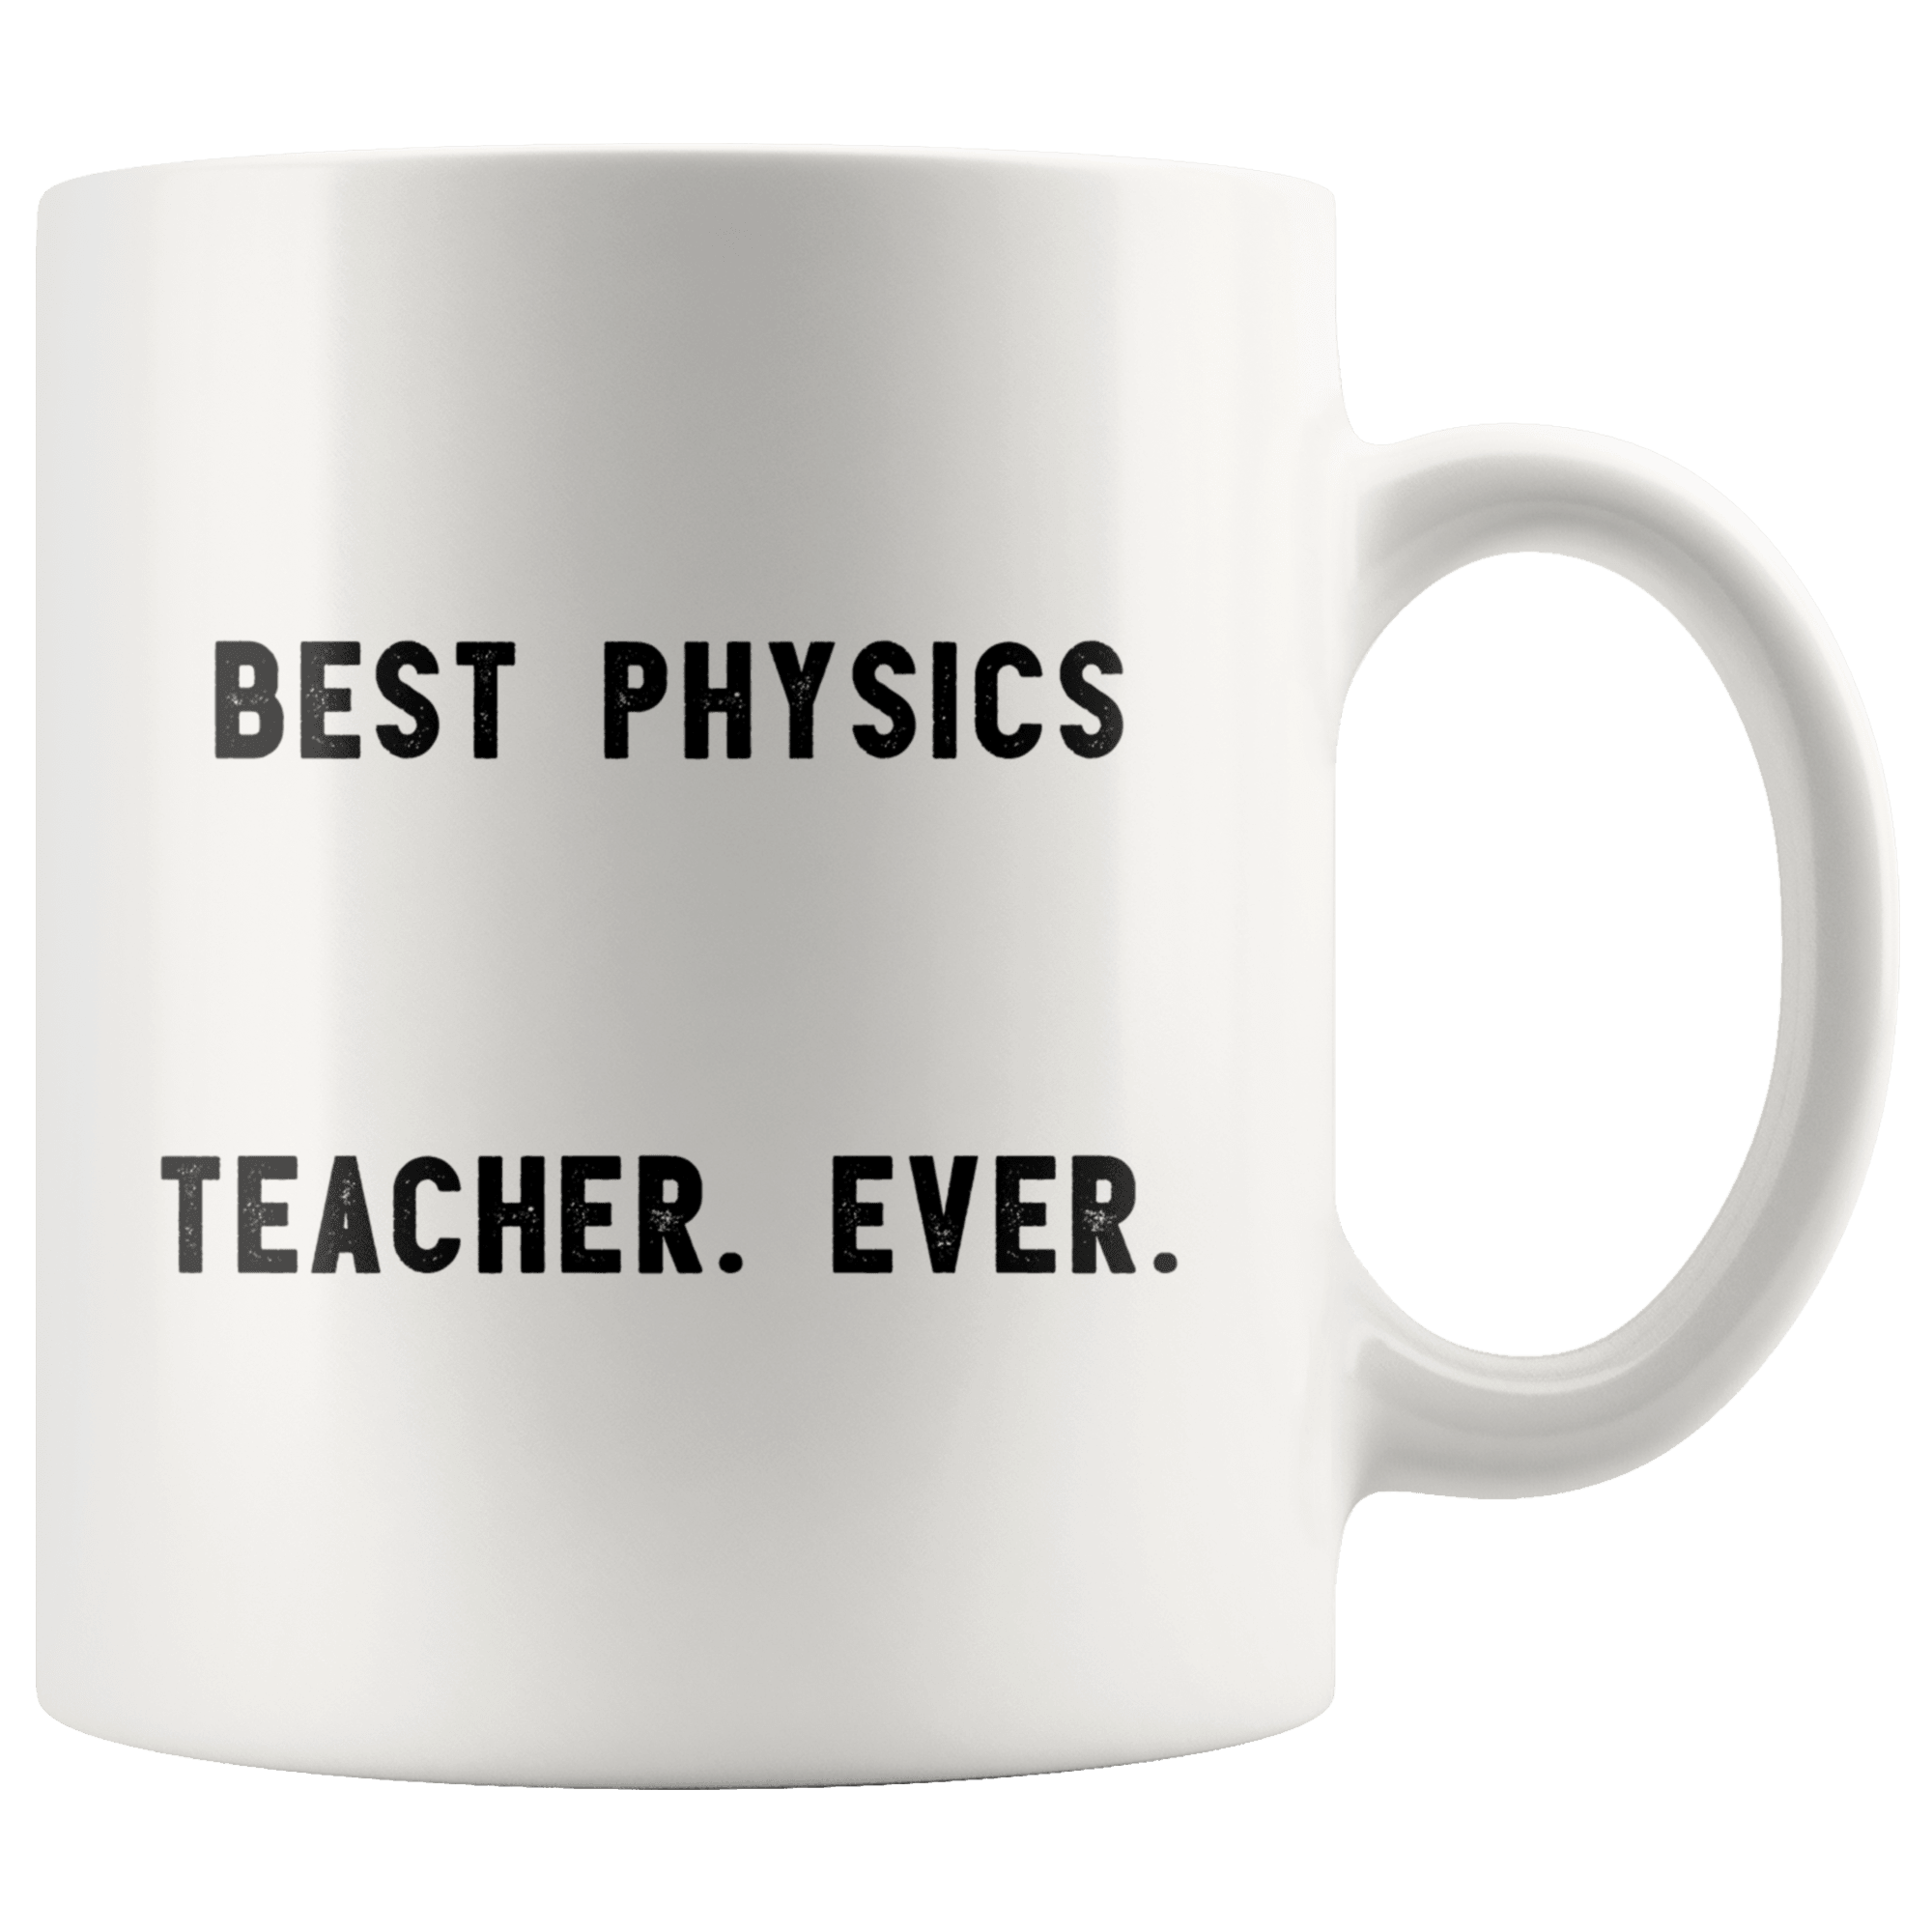 AASTHA IMAGINE Physics Equation Printed Black Ceramic Coffee/Tea Mug (11 Oz  Cup ) Best for The